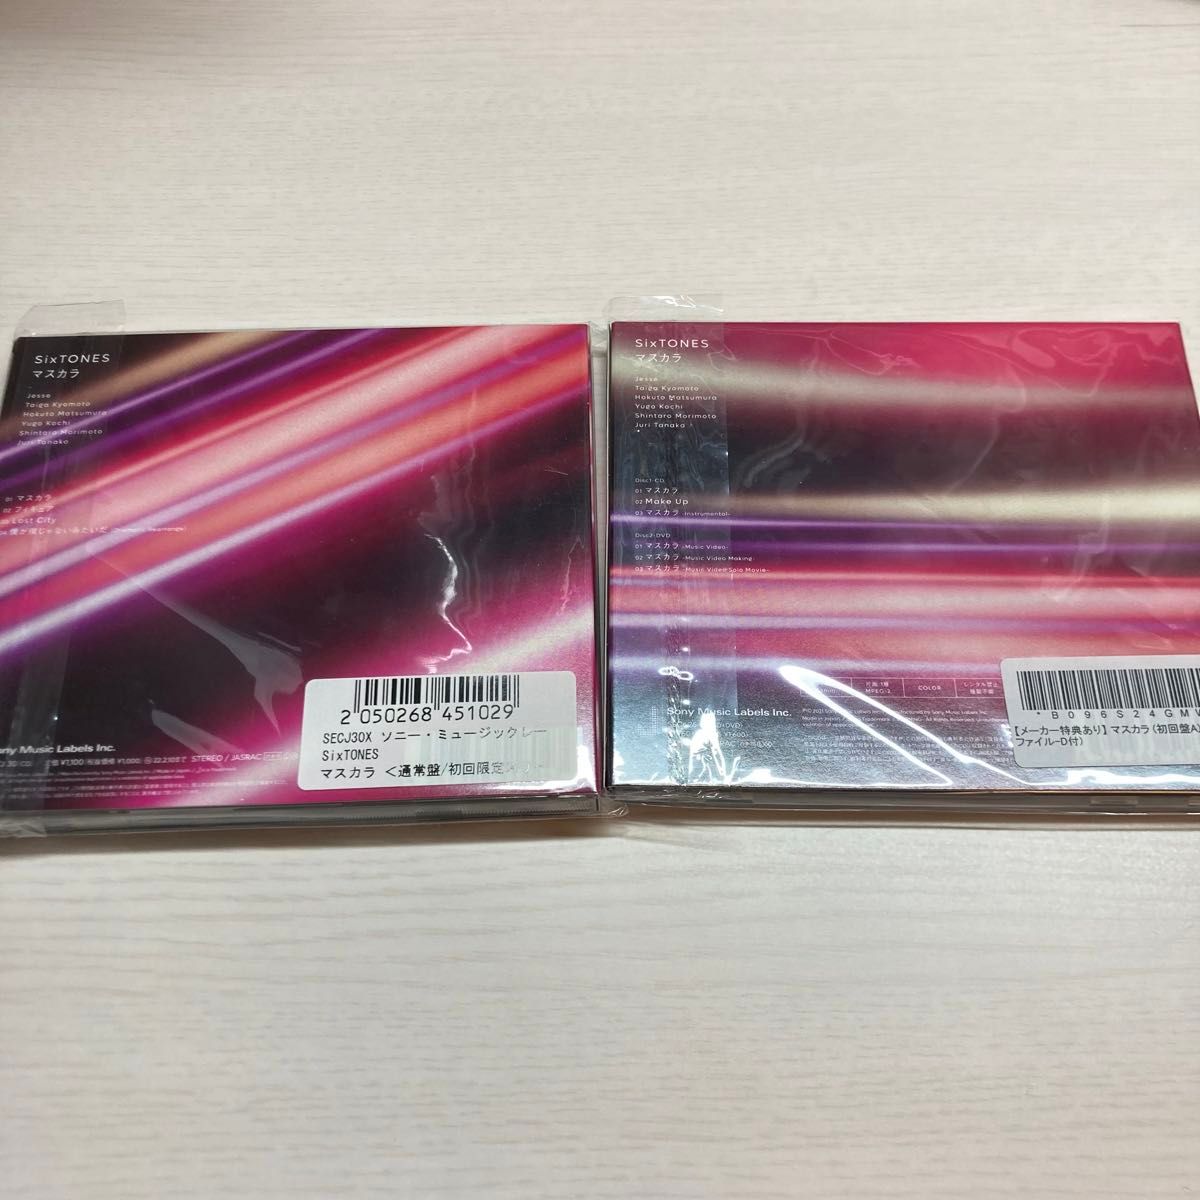 SixTONES マスカラ 初回盤A 通常盤 2枚セット スリーブケース CD+DVD